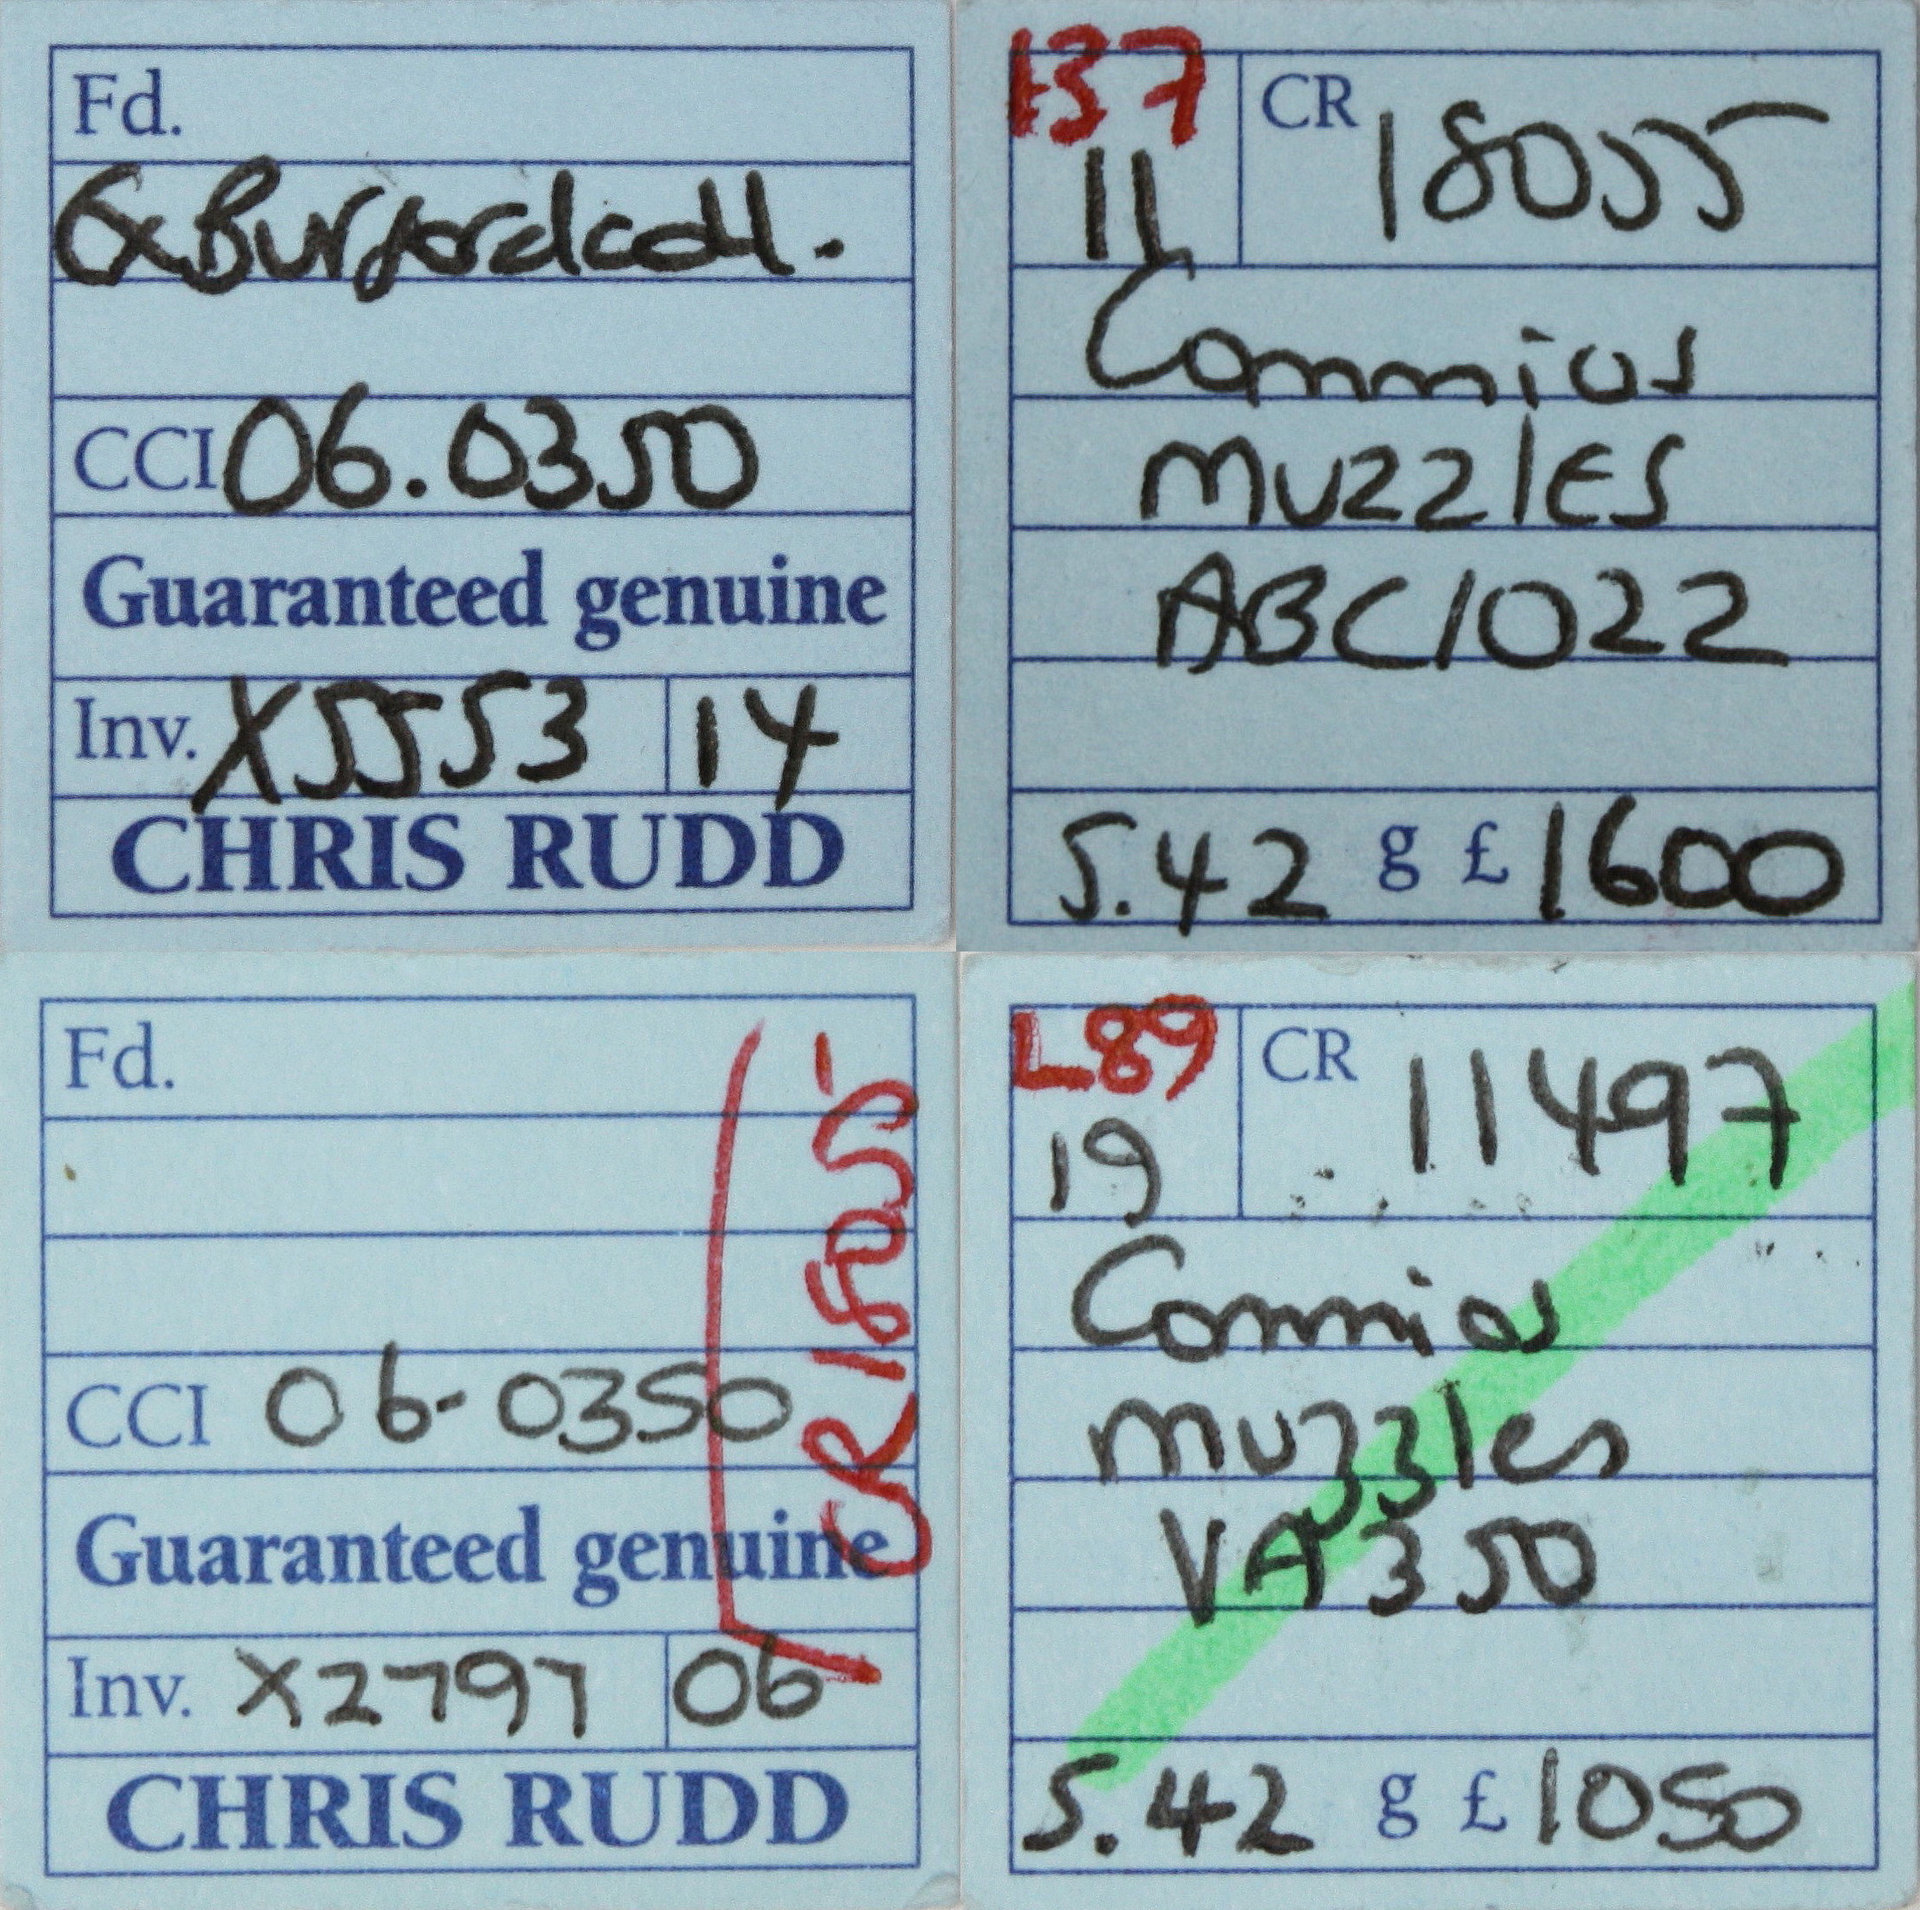 Chris Rudd auction tickets.jpg